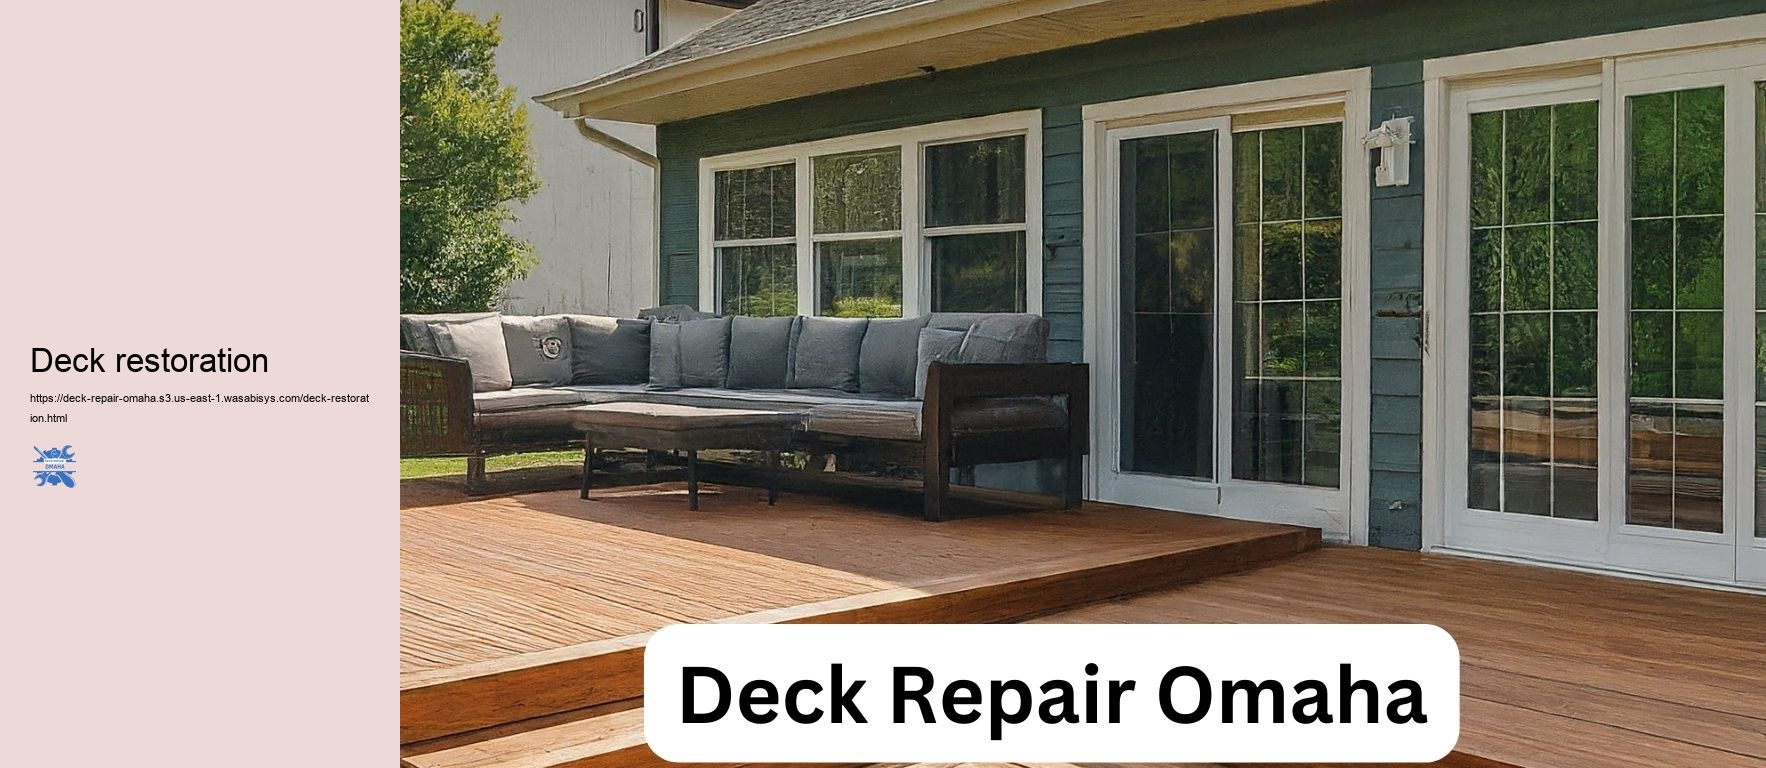 Deck restoration